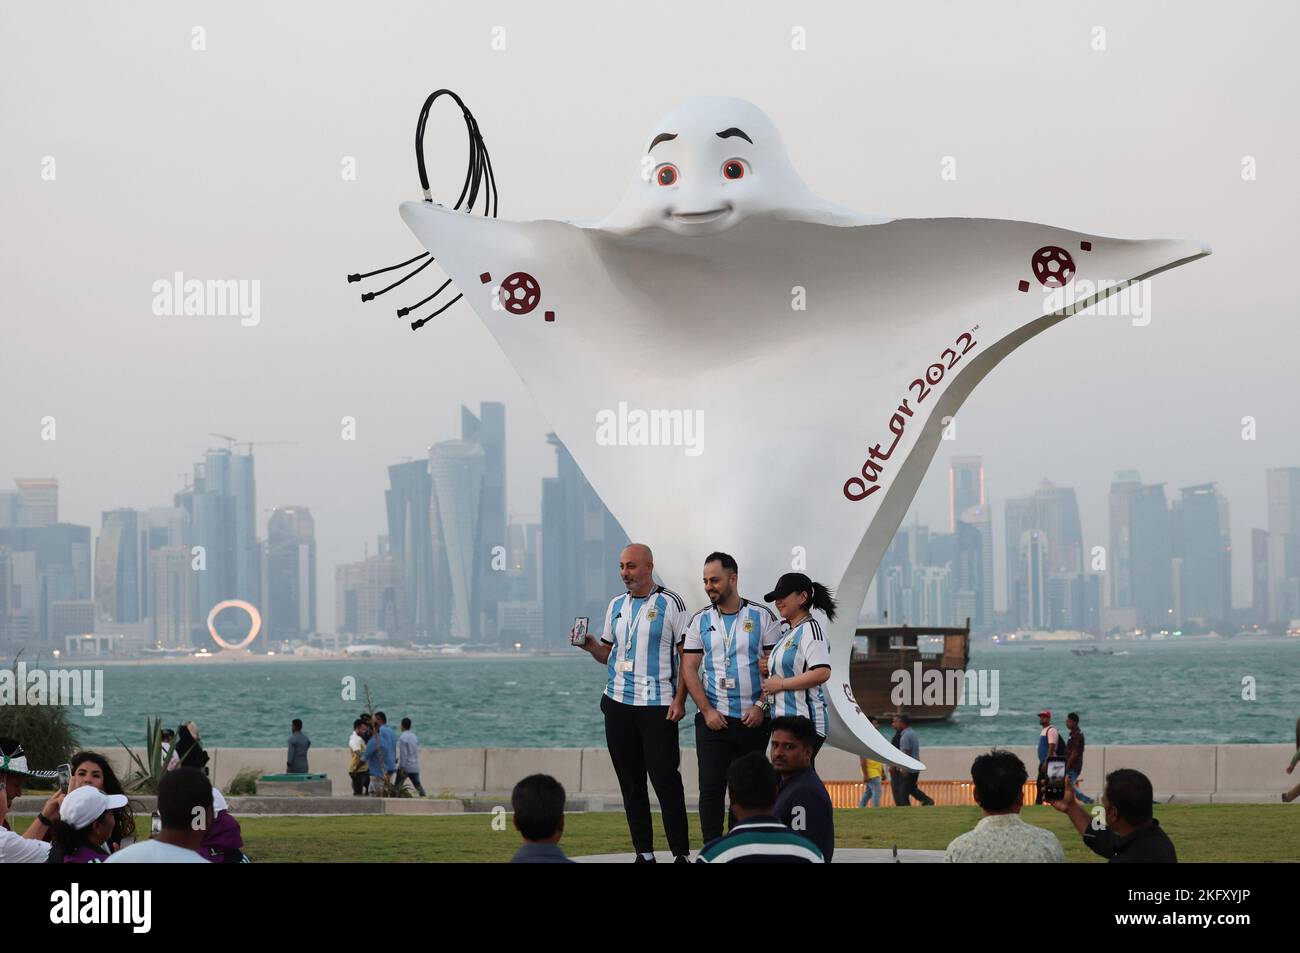 Doha, Qatar. 20th Nov, 2022. People pose with the 2022 Qatar FIFA World Cup official mascot La'eeb at Al Bidda park in Doha, Qatar, Nov. 20, 2022. Credit: Meng Yongmin/Xinhua/Alamy Live News Stock Photo